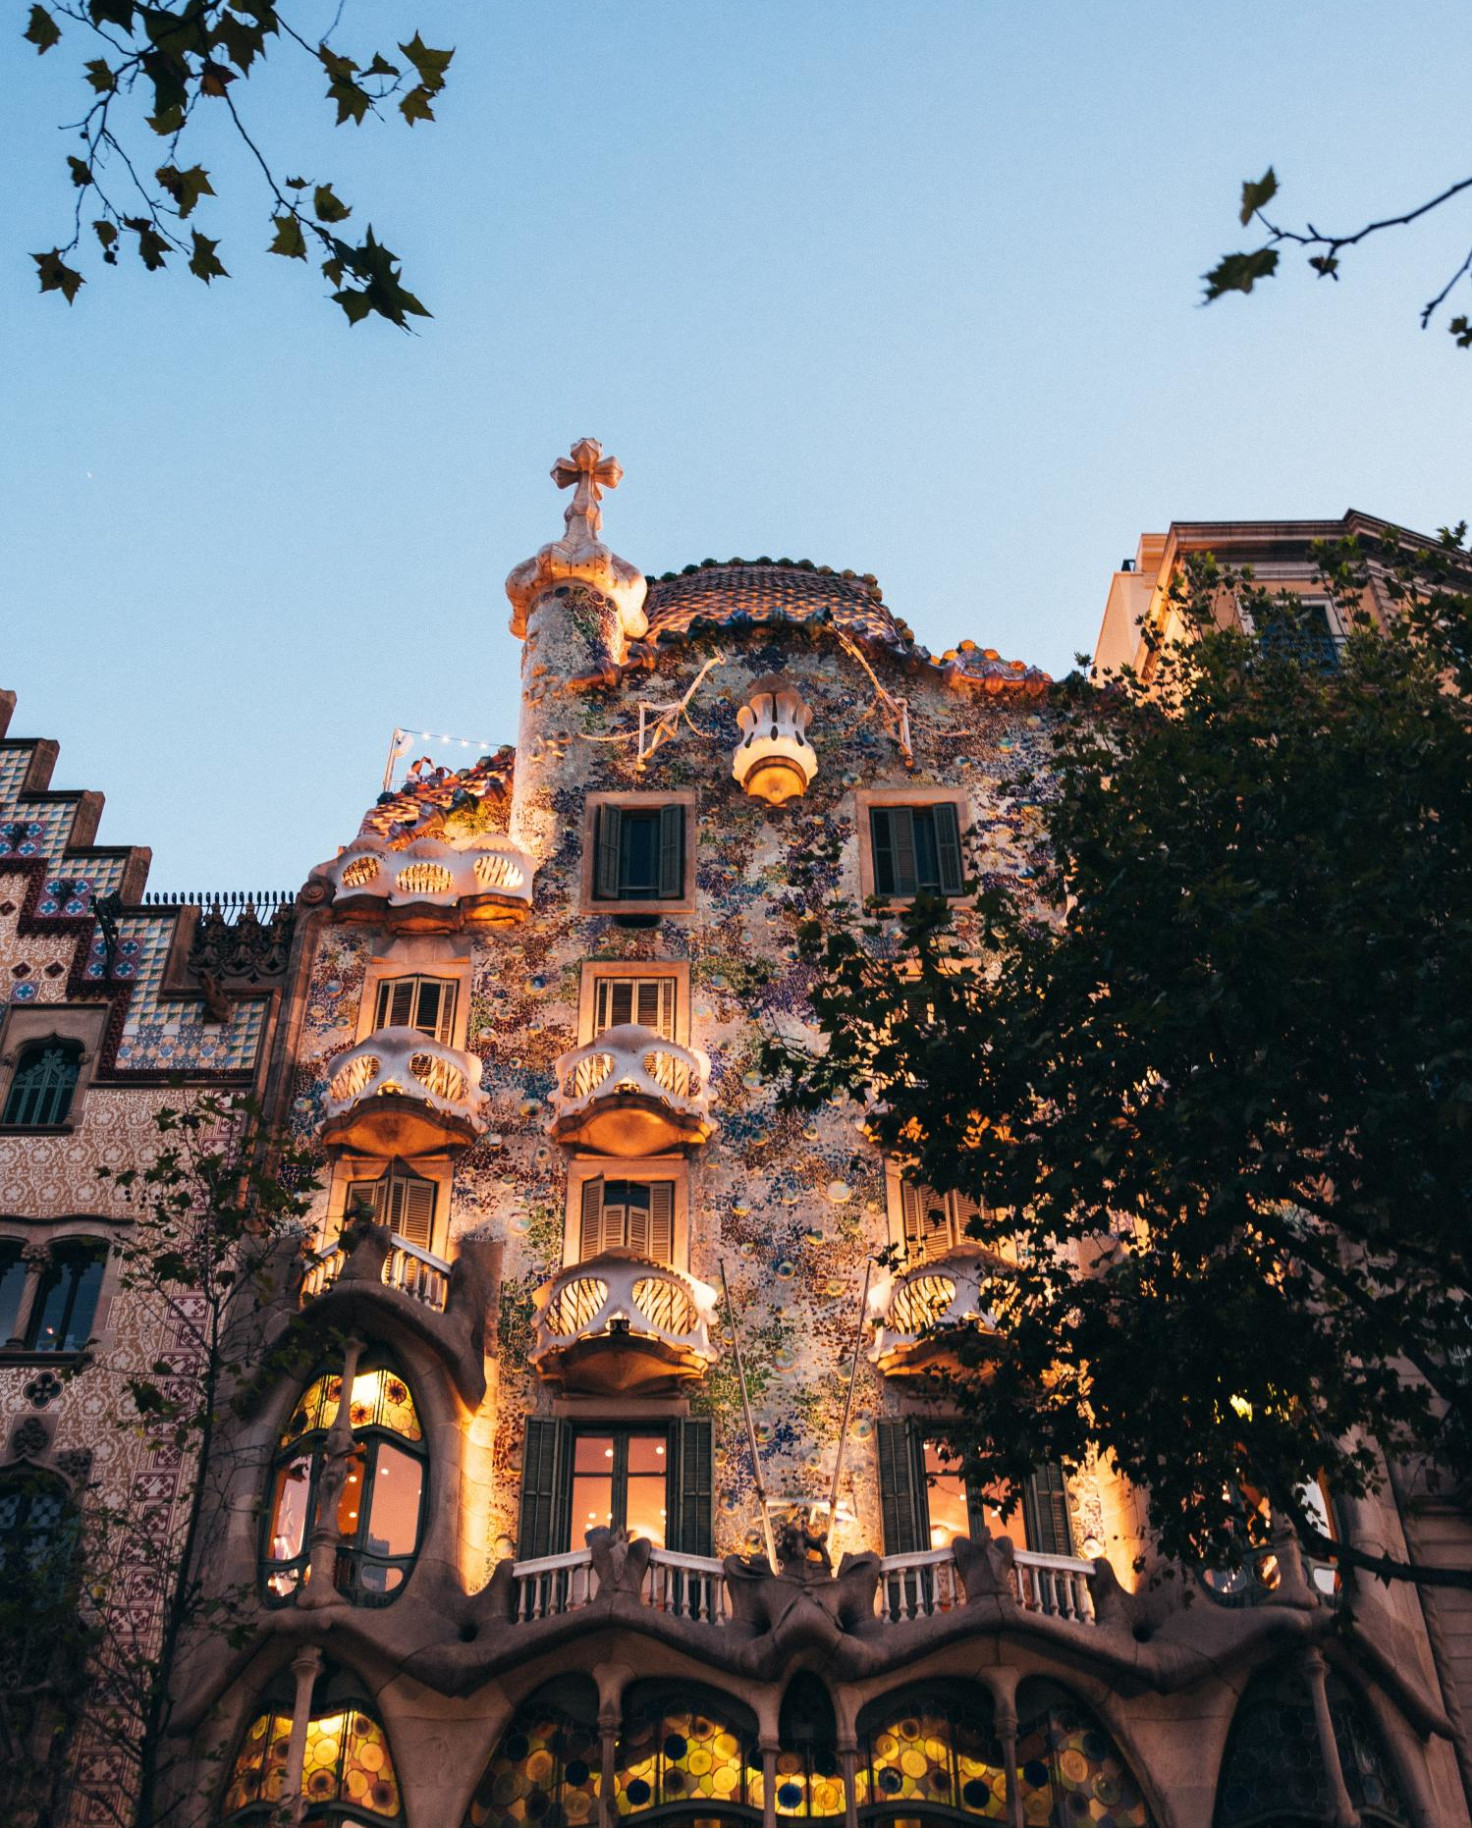 Antoni Gaudi's building in Barcelona at lit up at night.